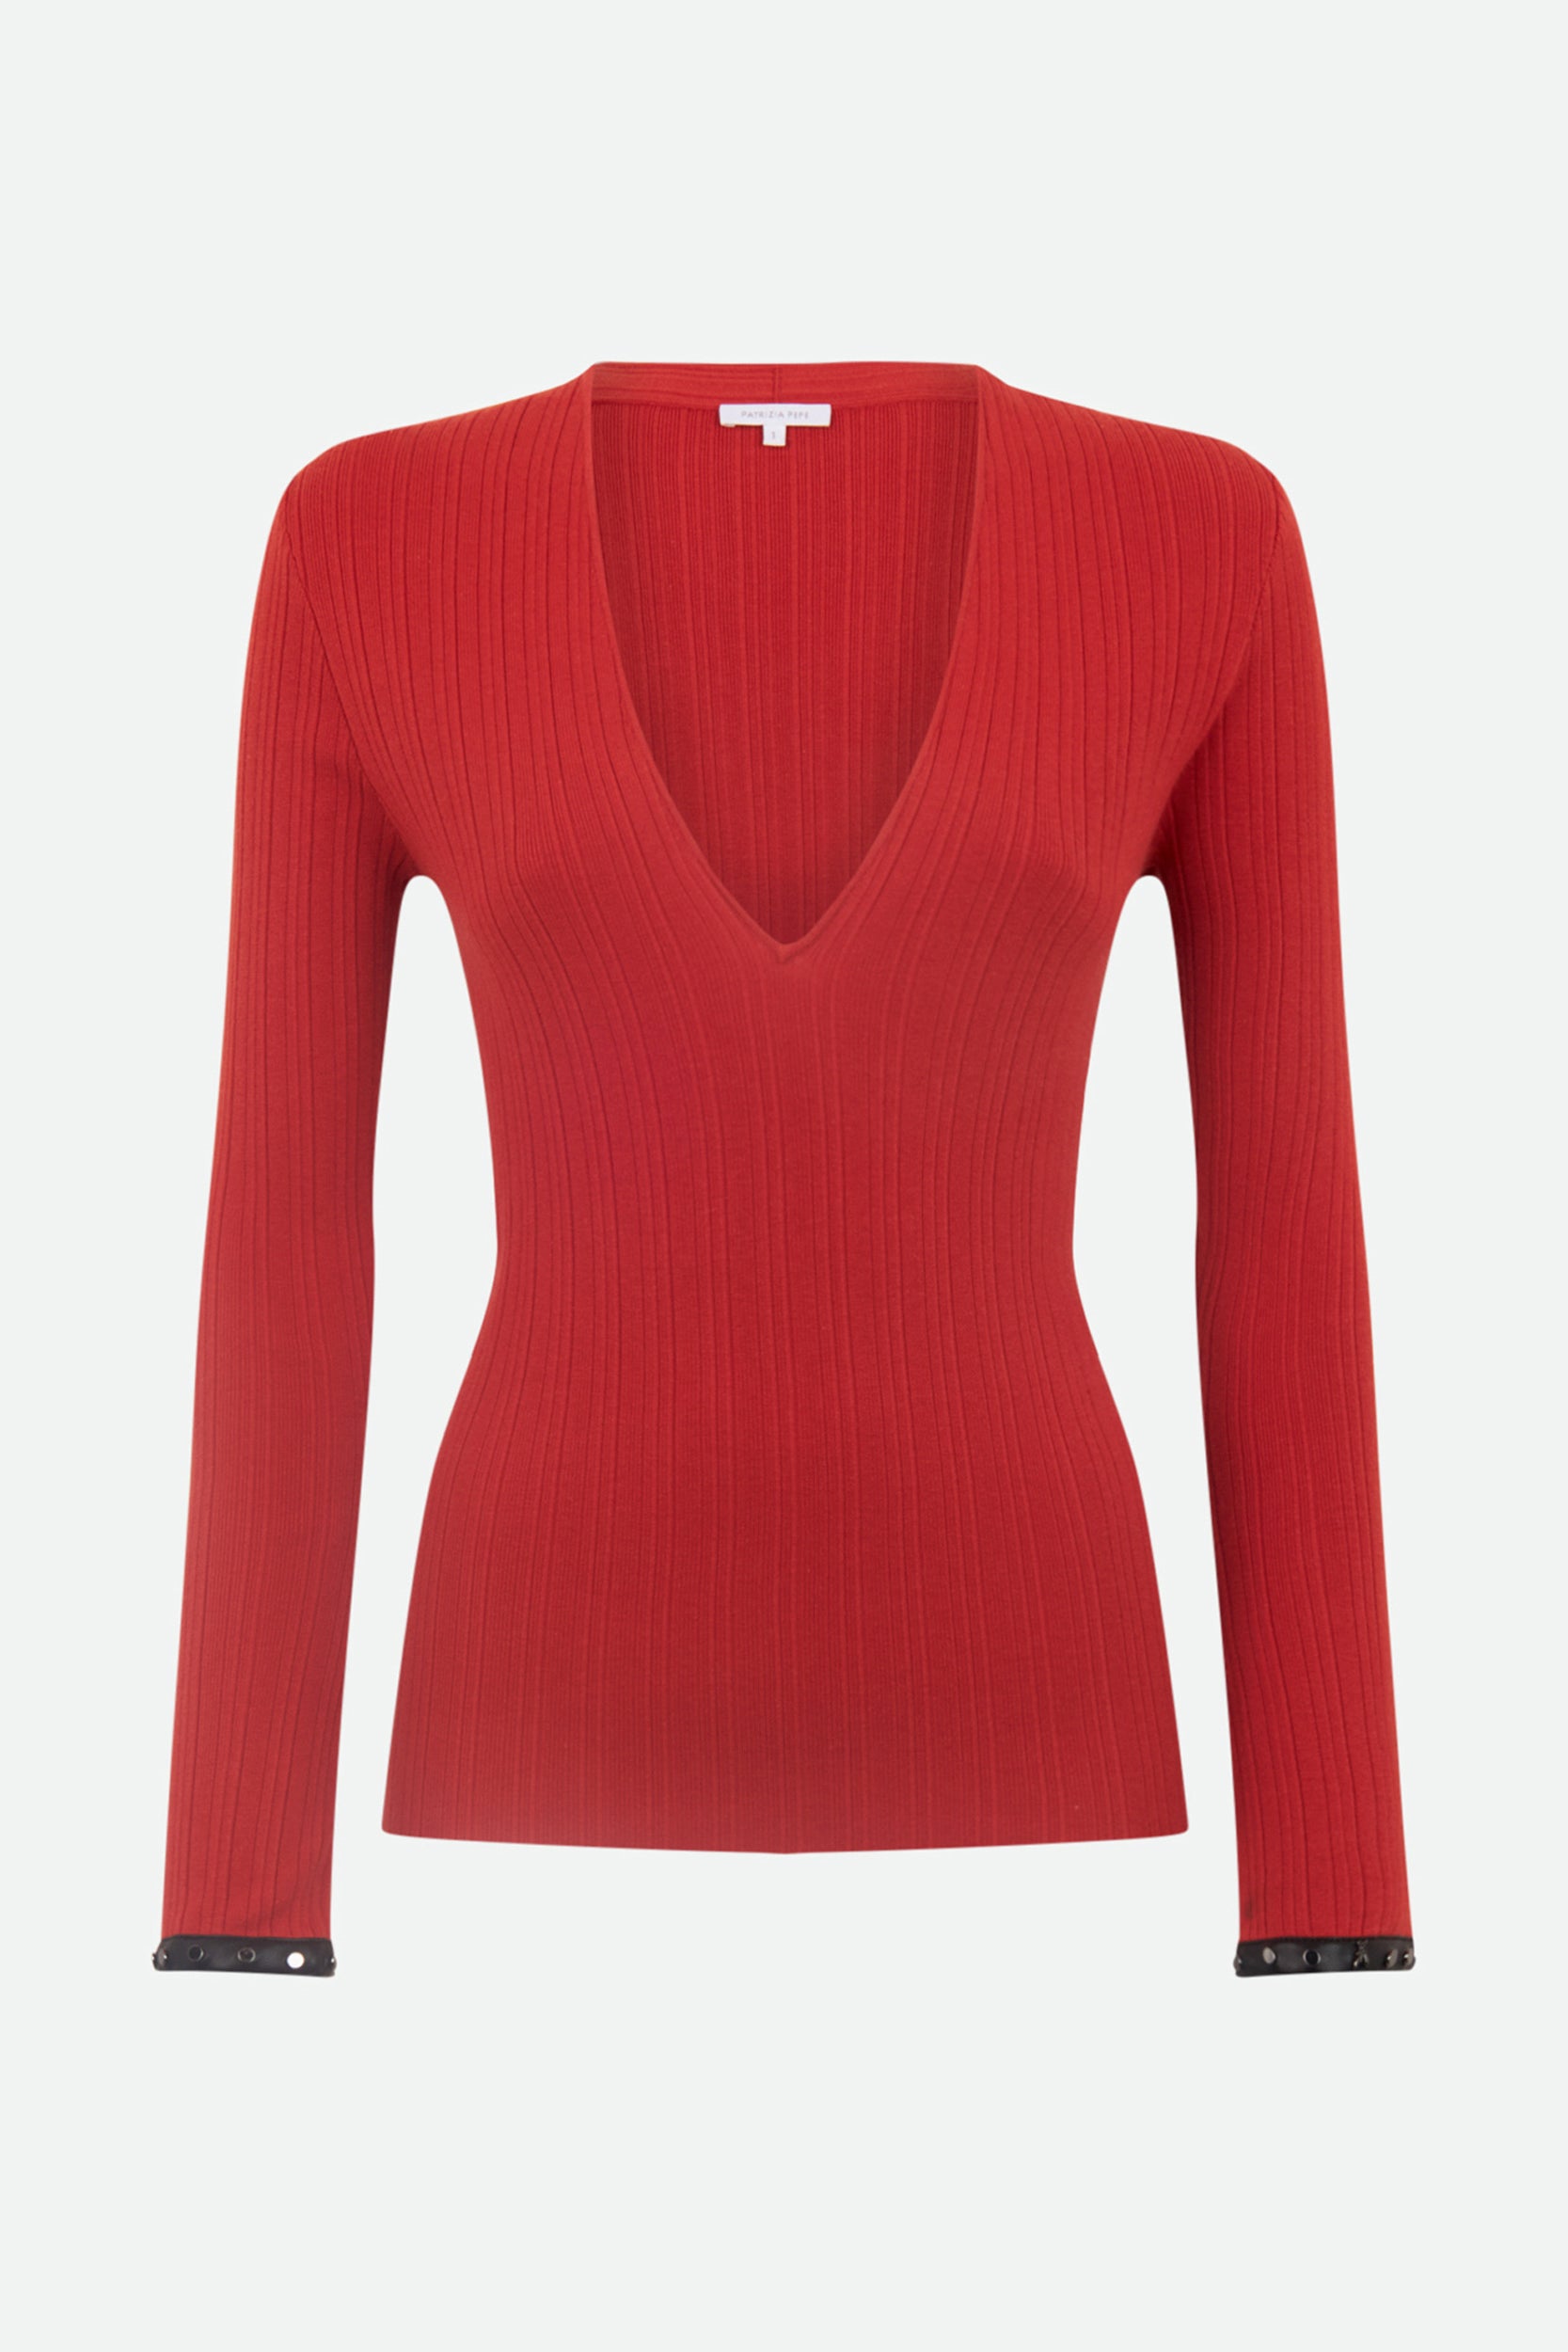 Patrizia Pepe Red Ribbed Sweater